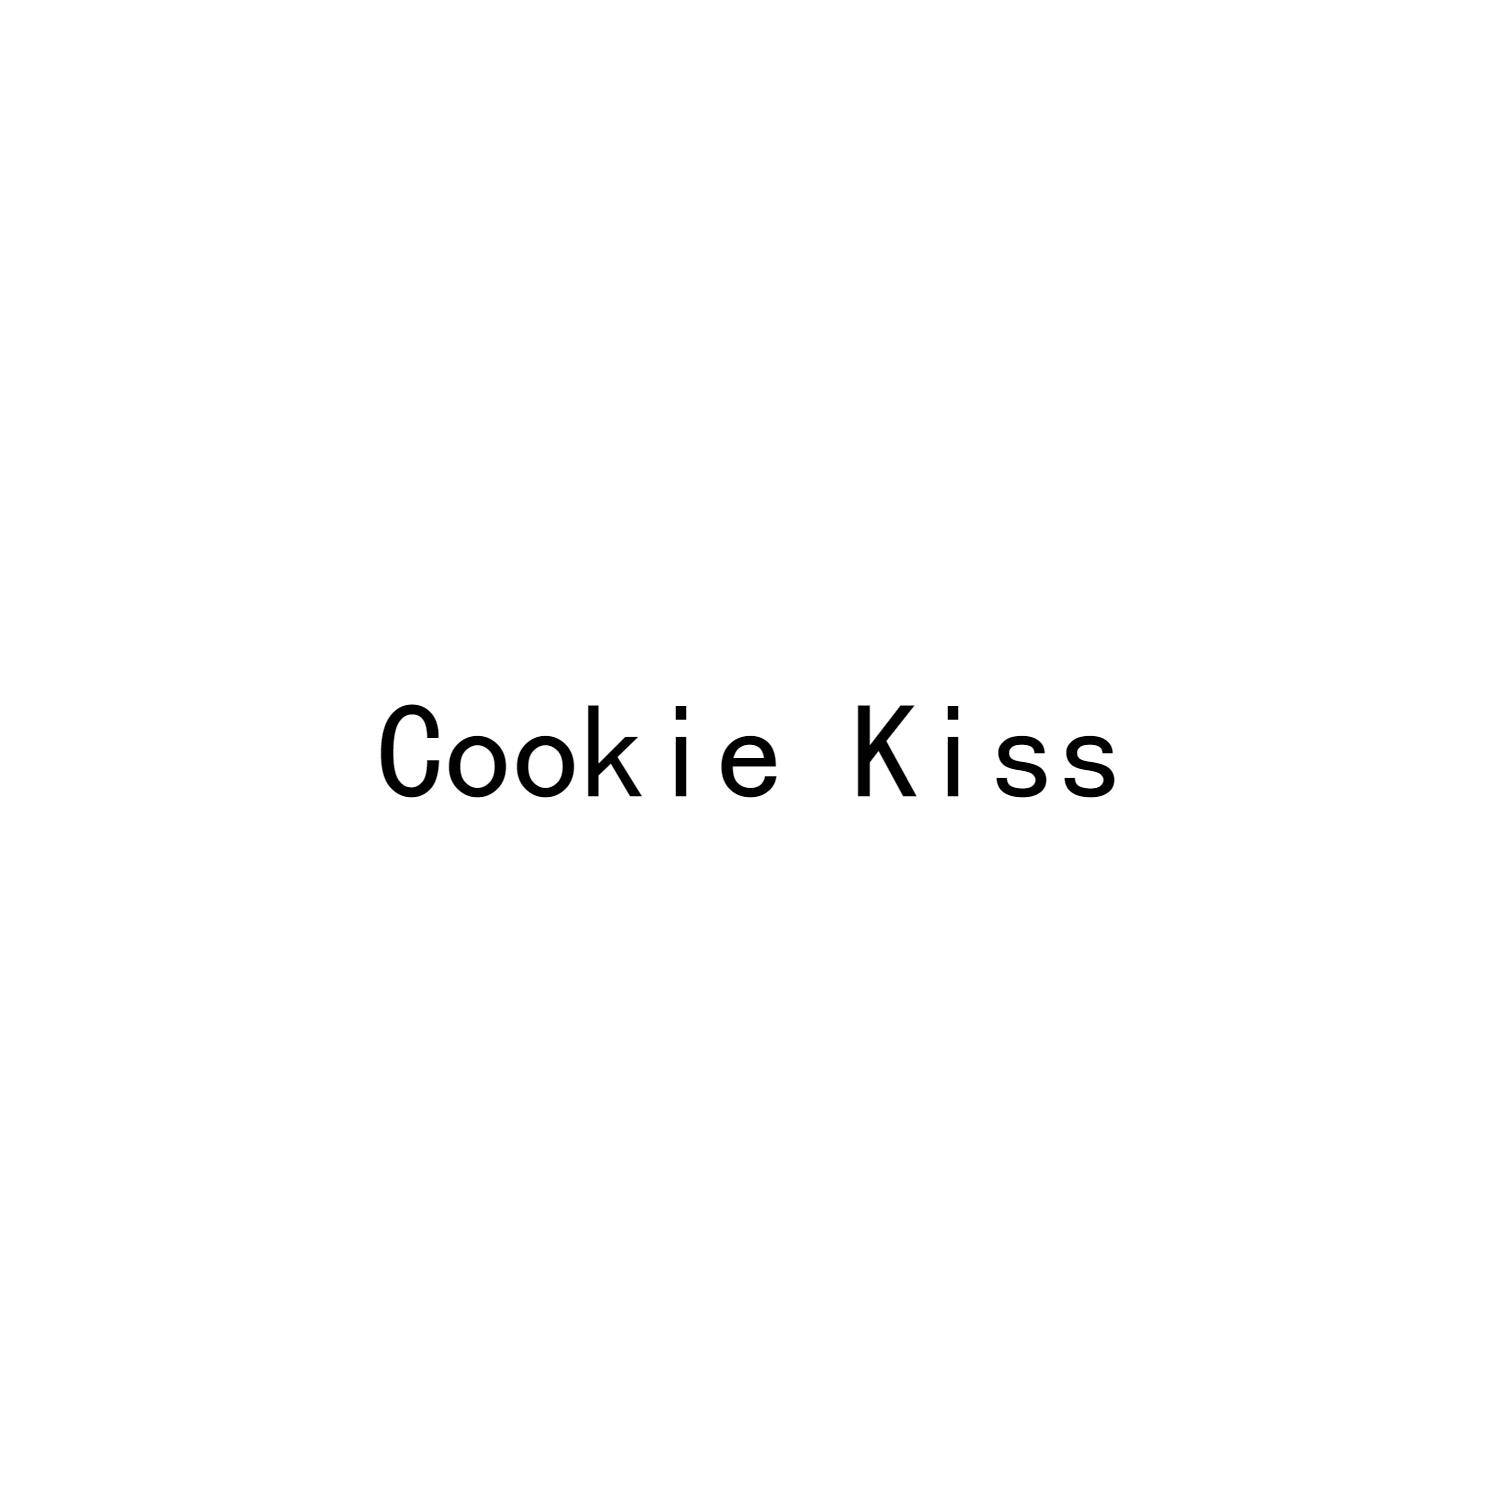 COOKIE KISS商标转让